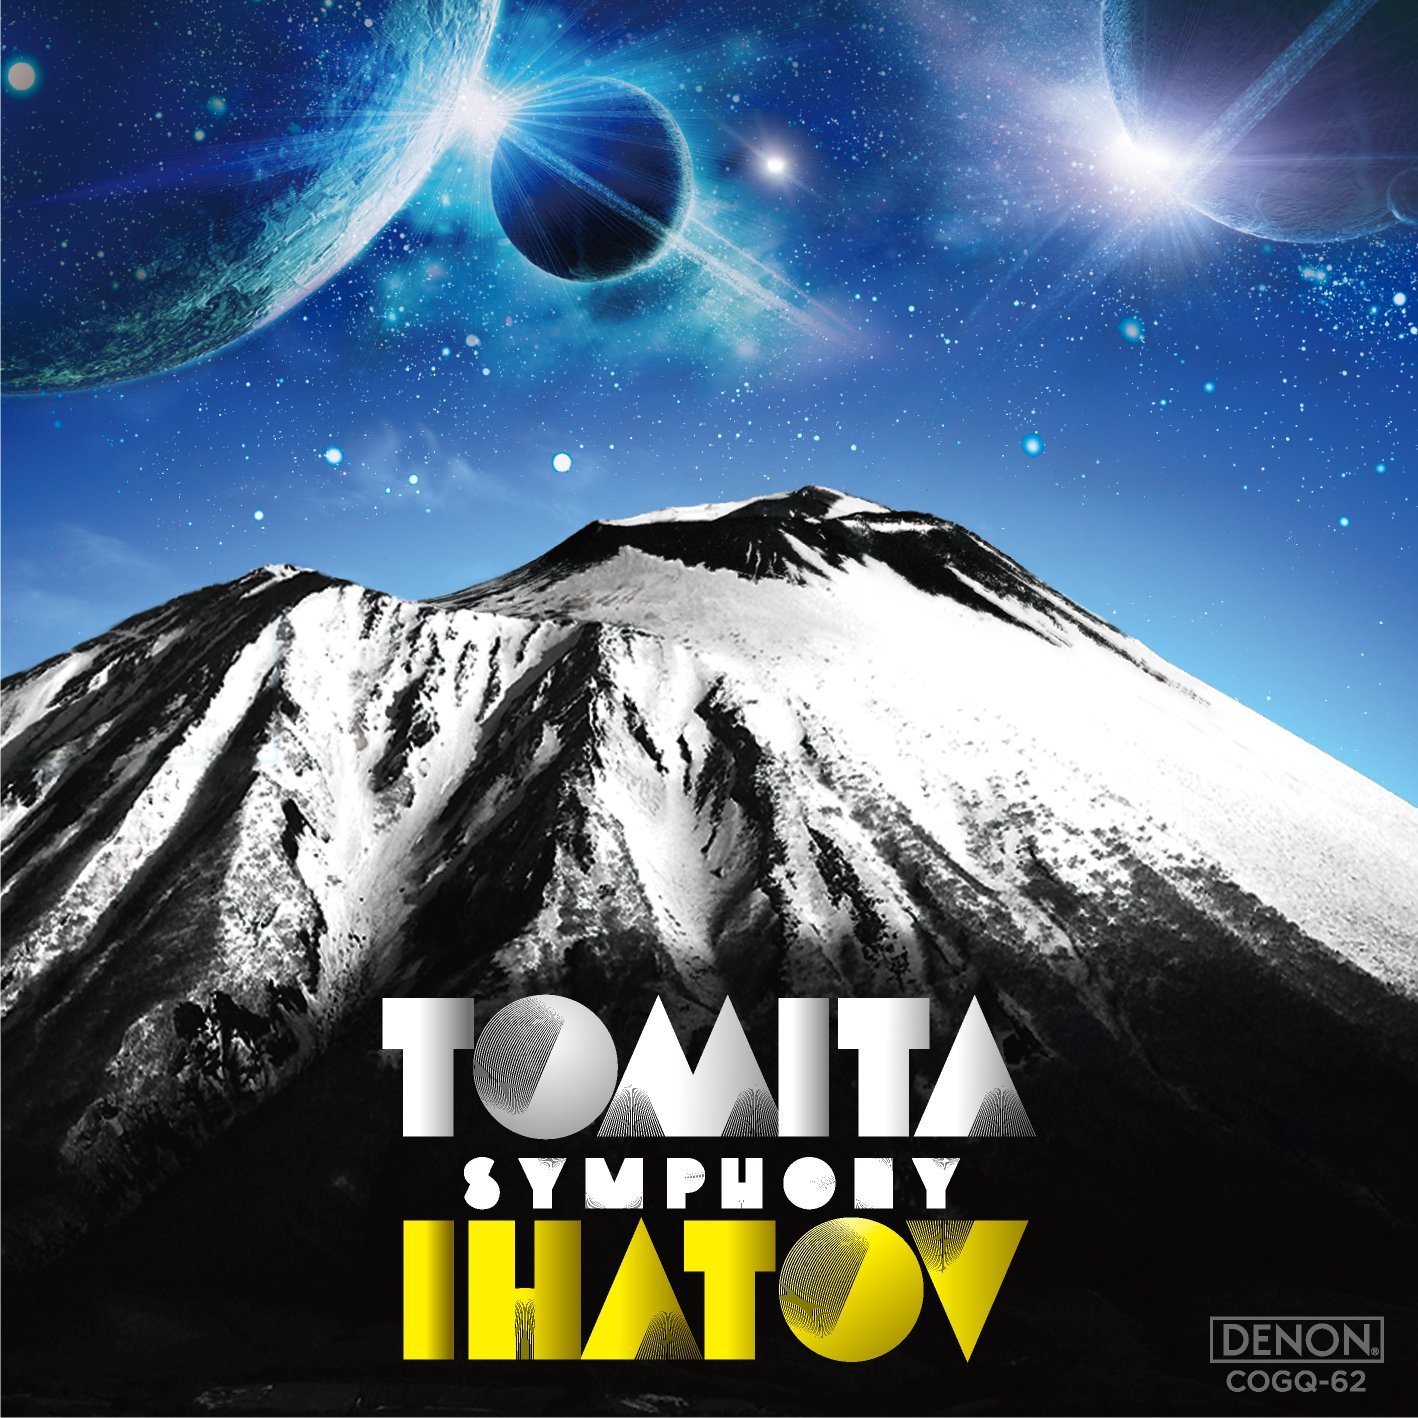 Isao Tomita×Hatsune Miku “SYMPHONY IHATOV” World Premier Recording will be on sale!